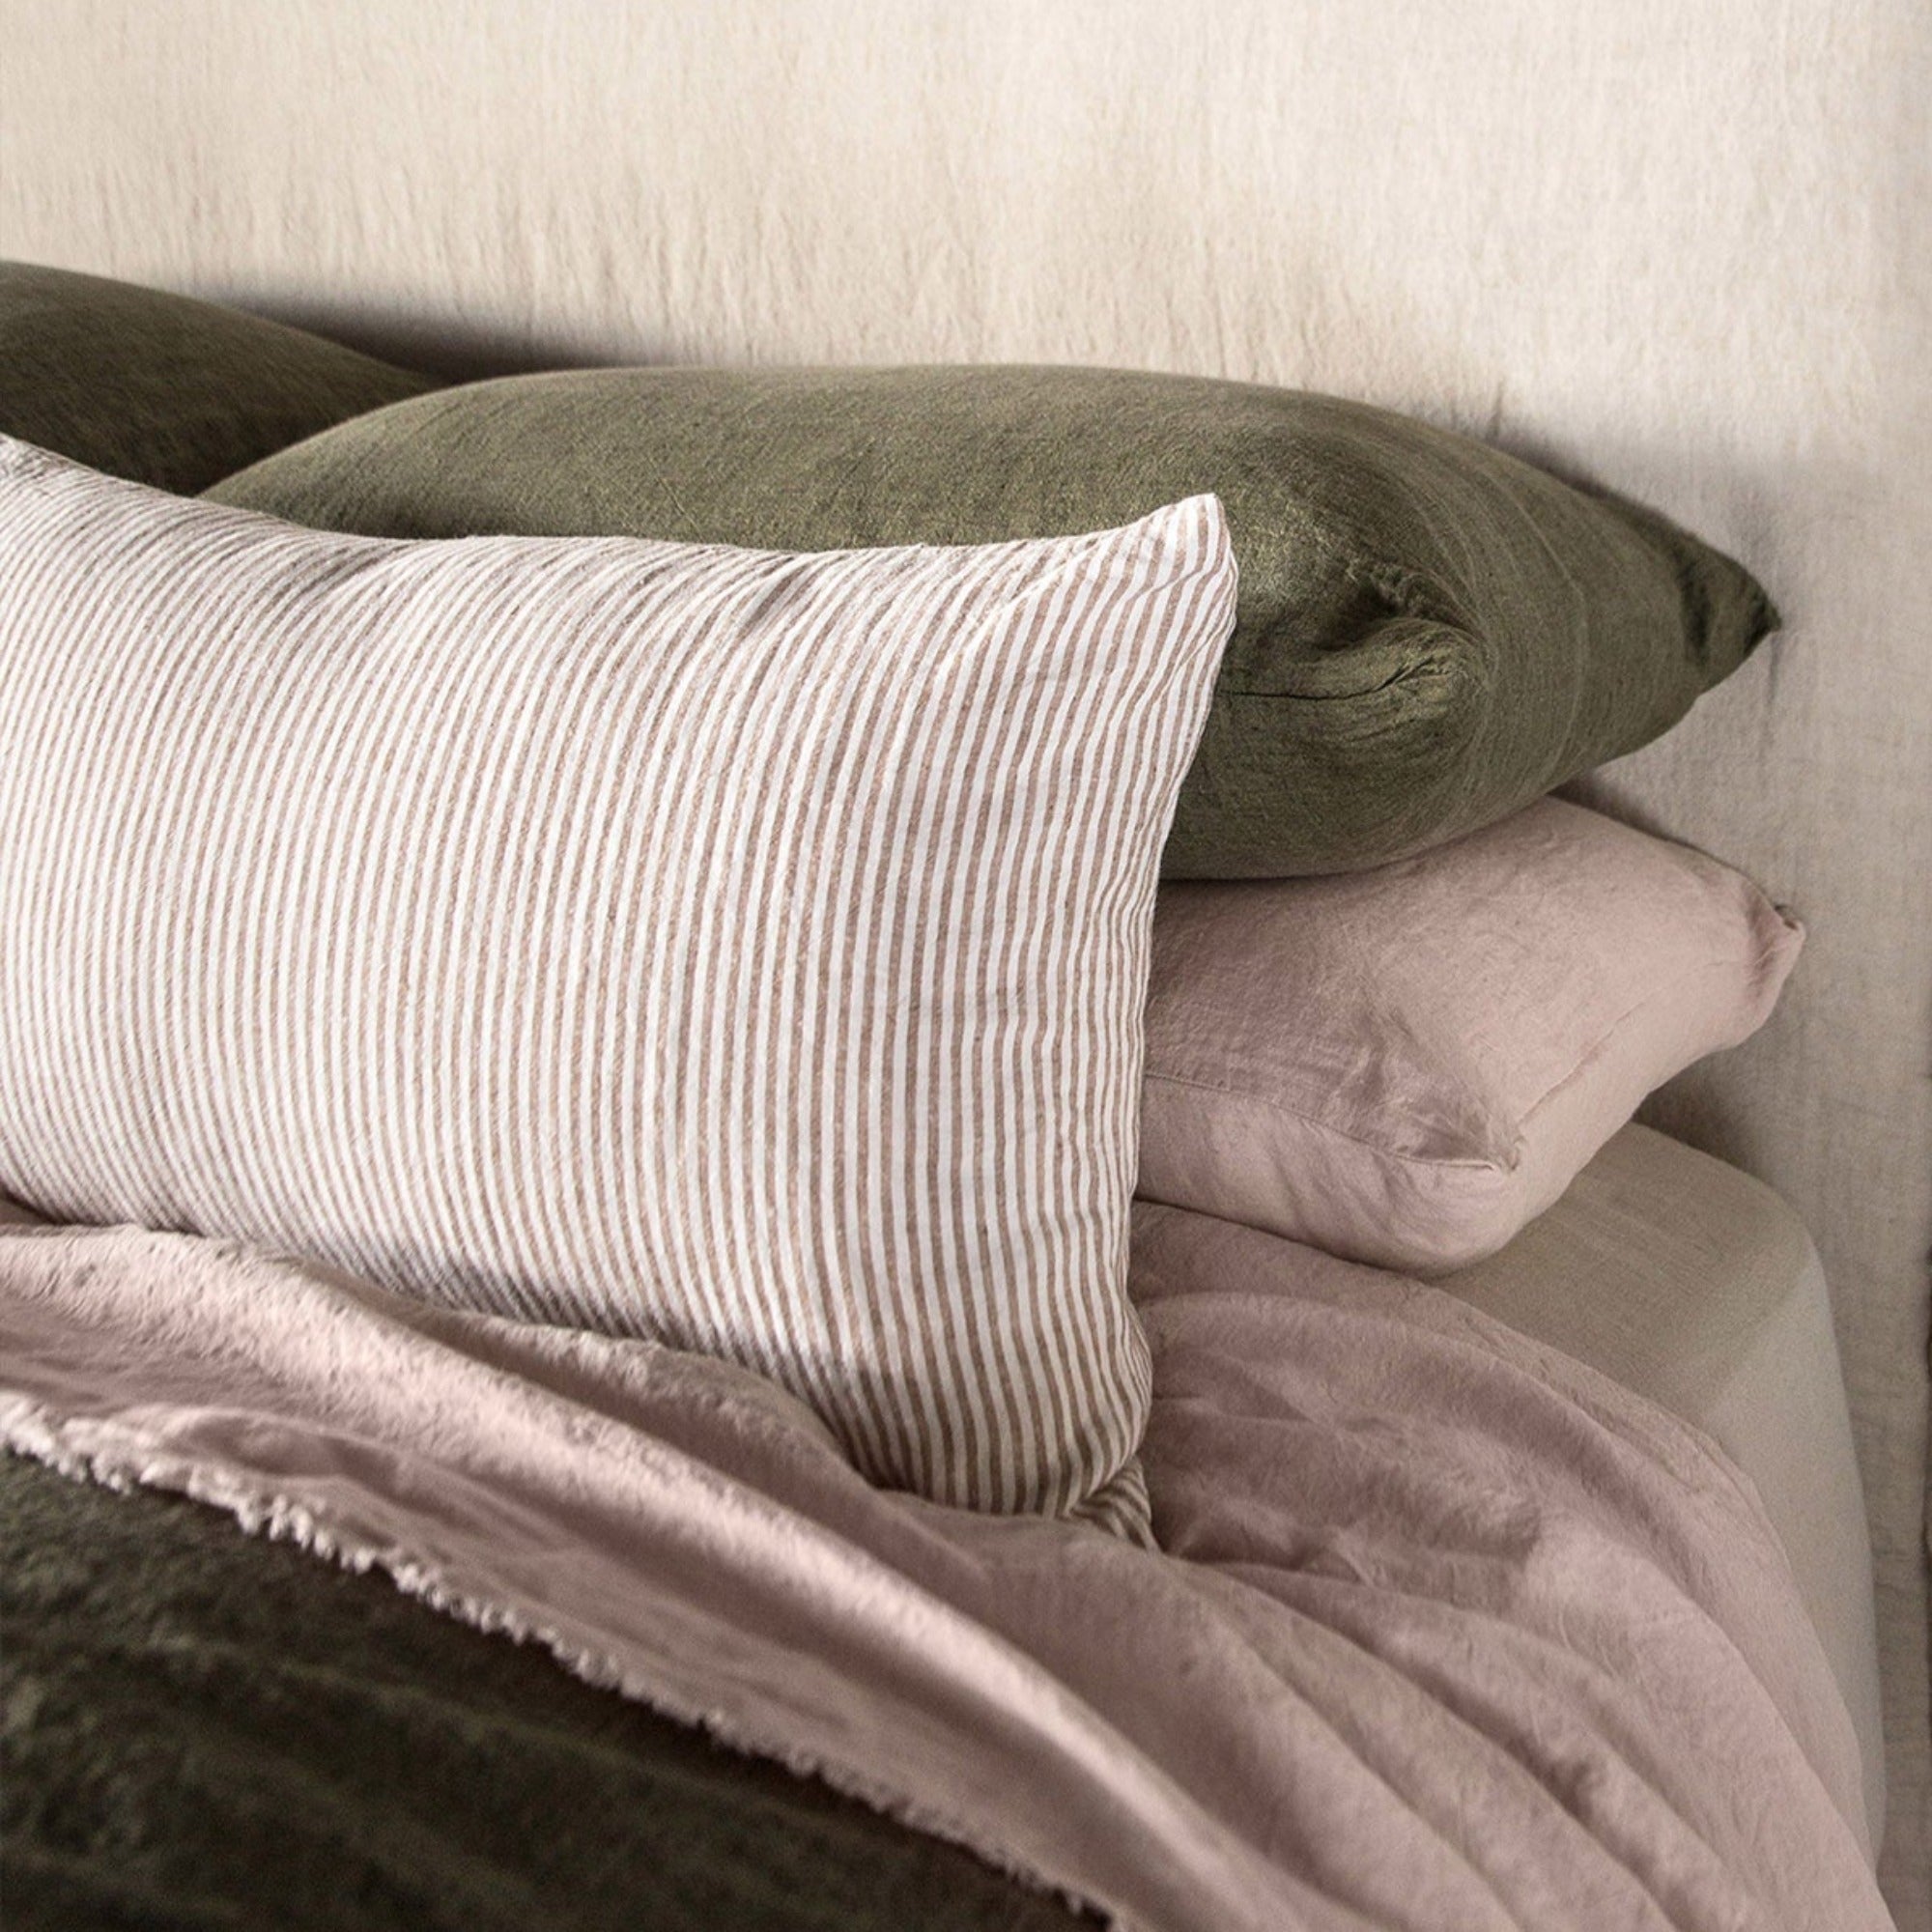 Stripe Linen Cushion | White & Rust Stripe | Hale Mercantile Co.